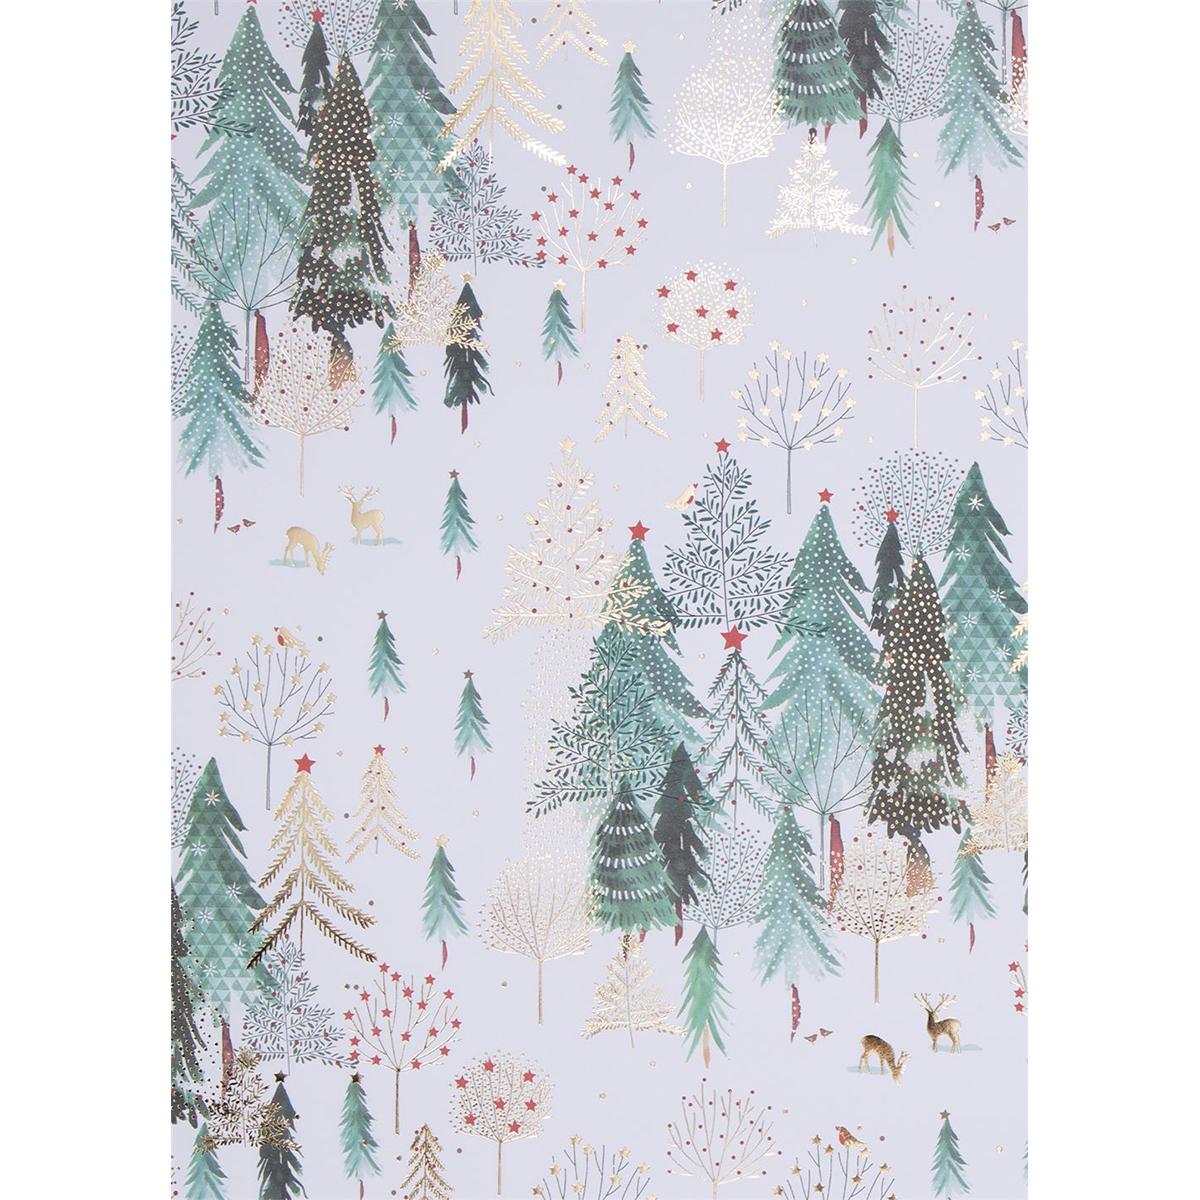 Giftwrap - Luxury Winter Woodland Sheet Of Christmas Wrap Front Image